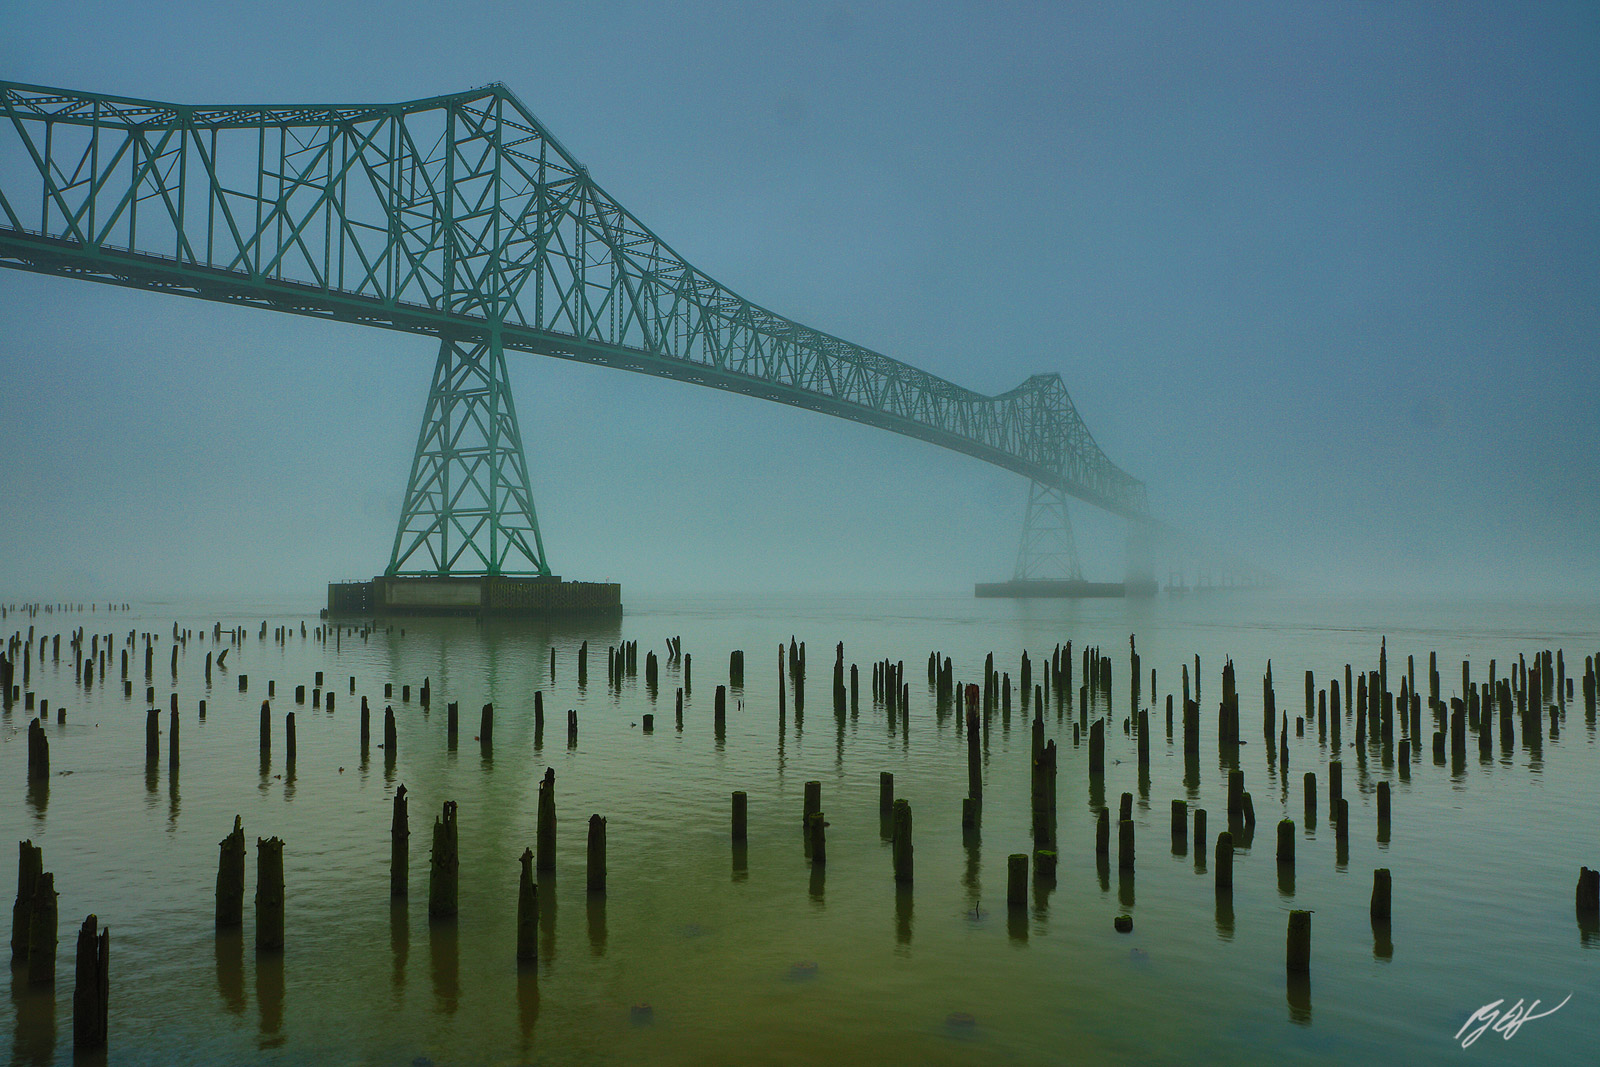 The Astoria Bridge in Fog from Astoria, Oregon